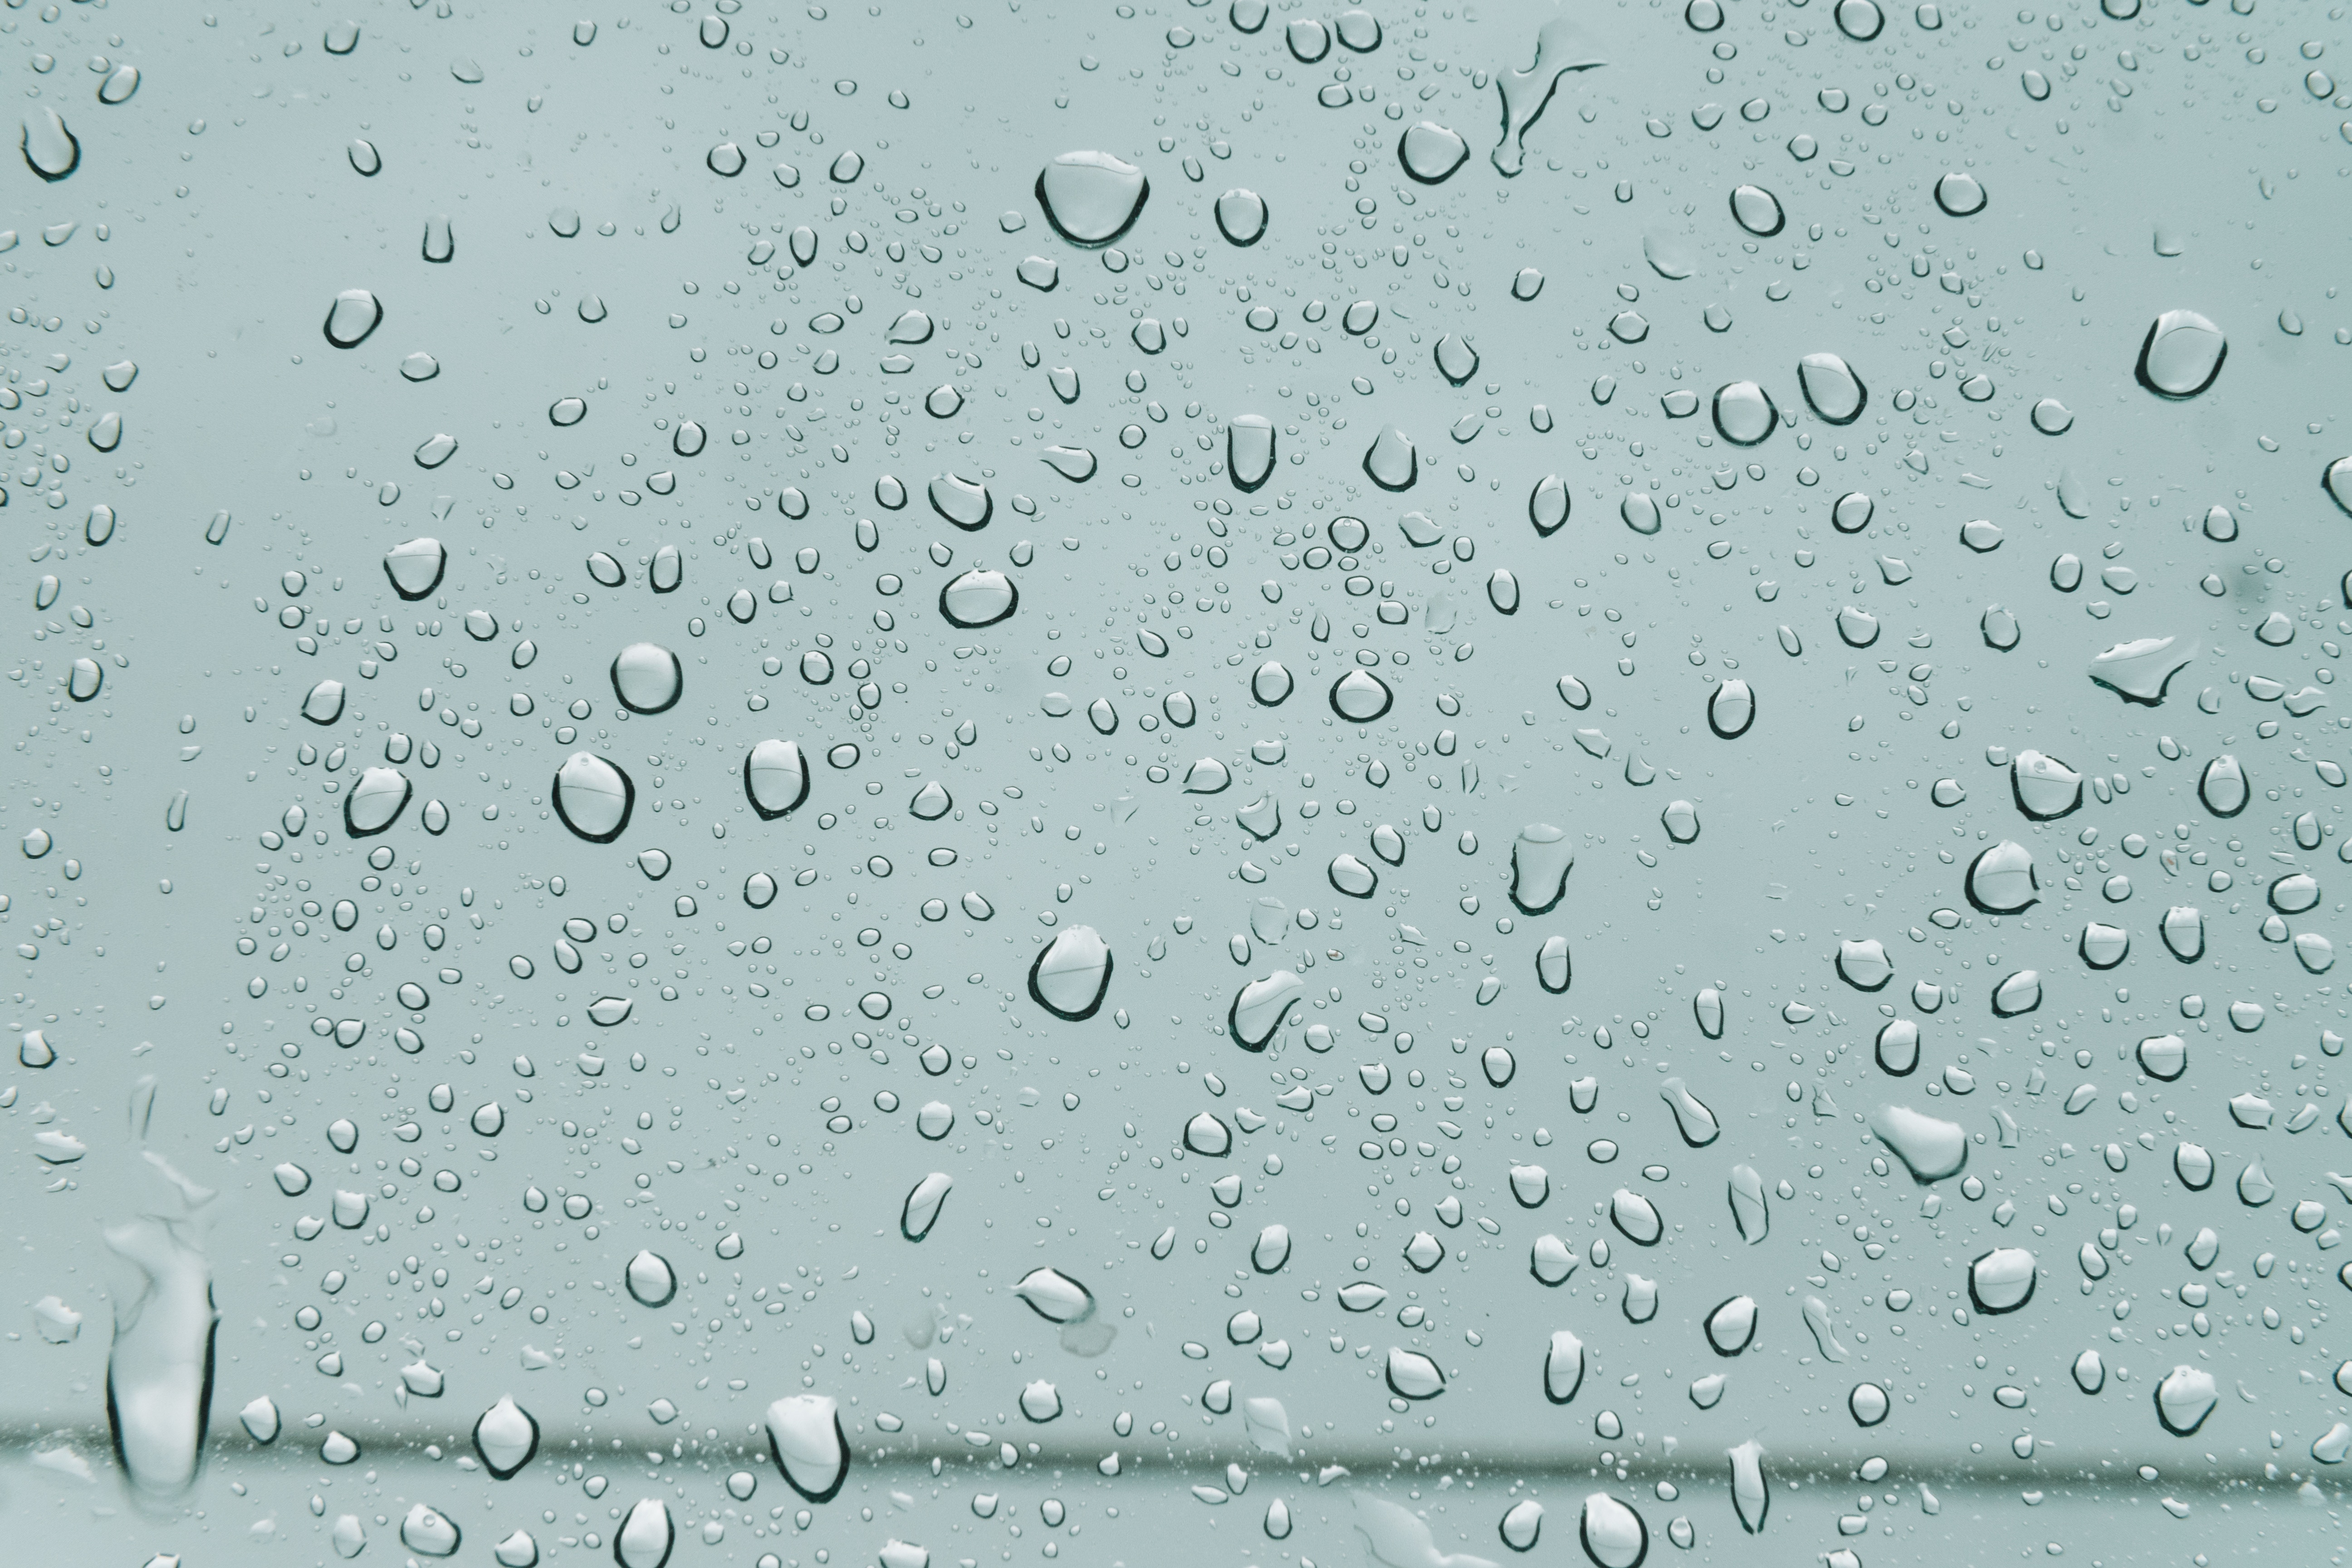 form, forms, rain, surface, drops, macro, wet, moisture, humid